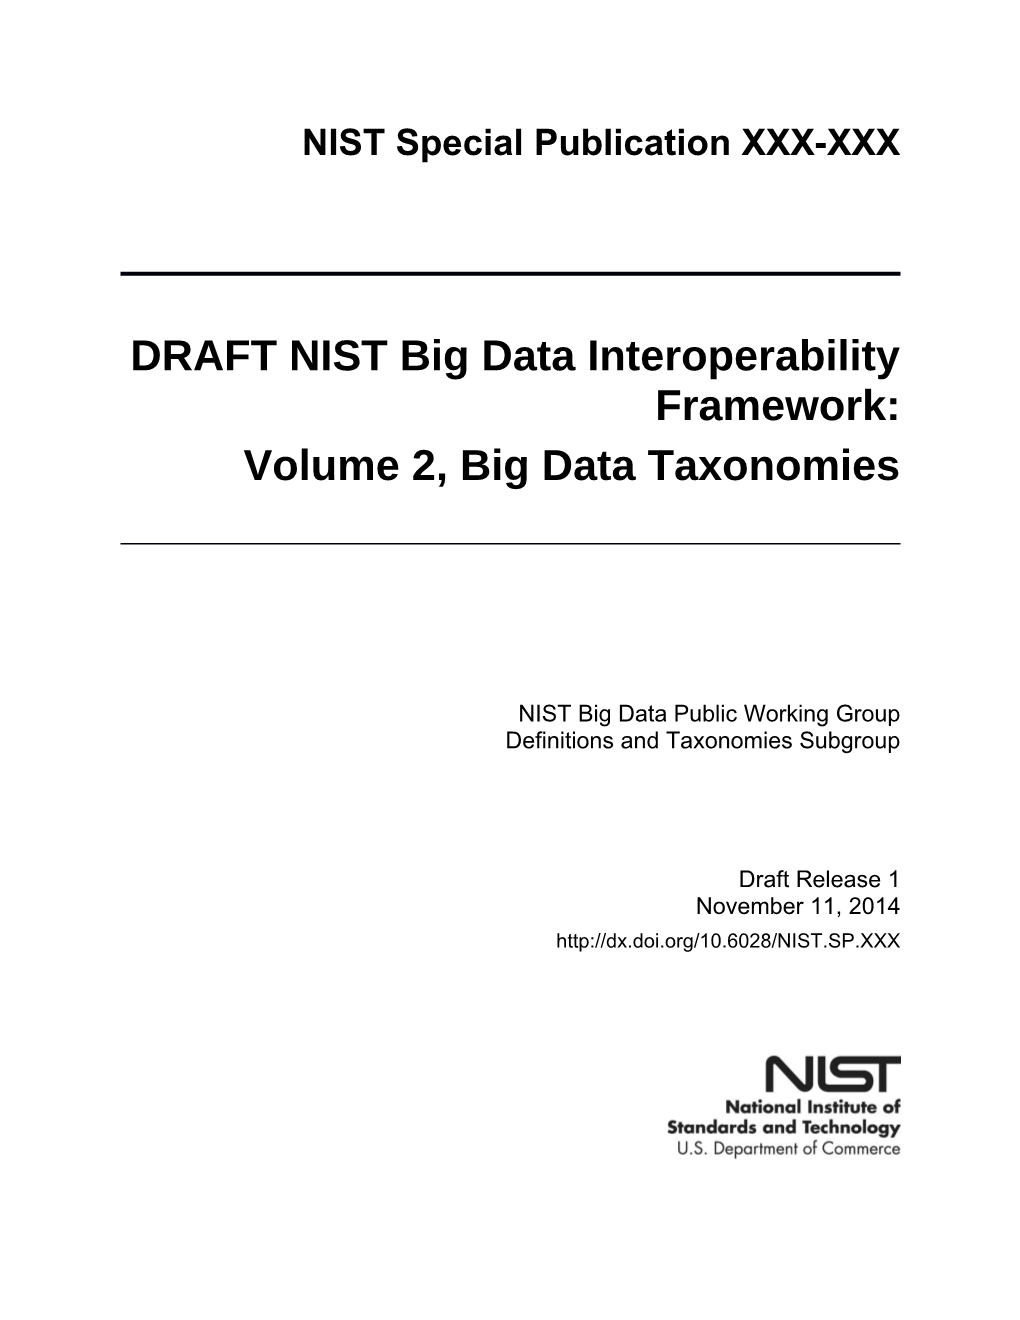 DRAFT NIST Big Data Interoperability Framework